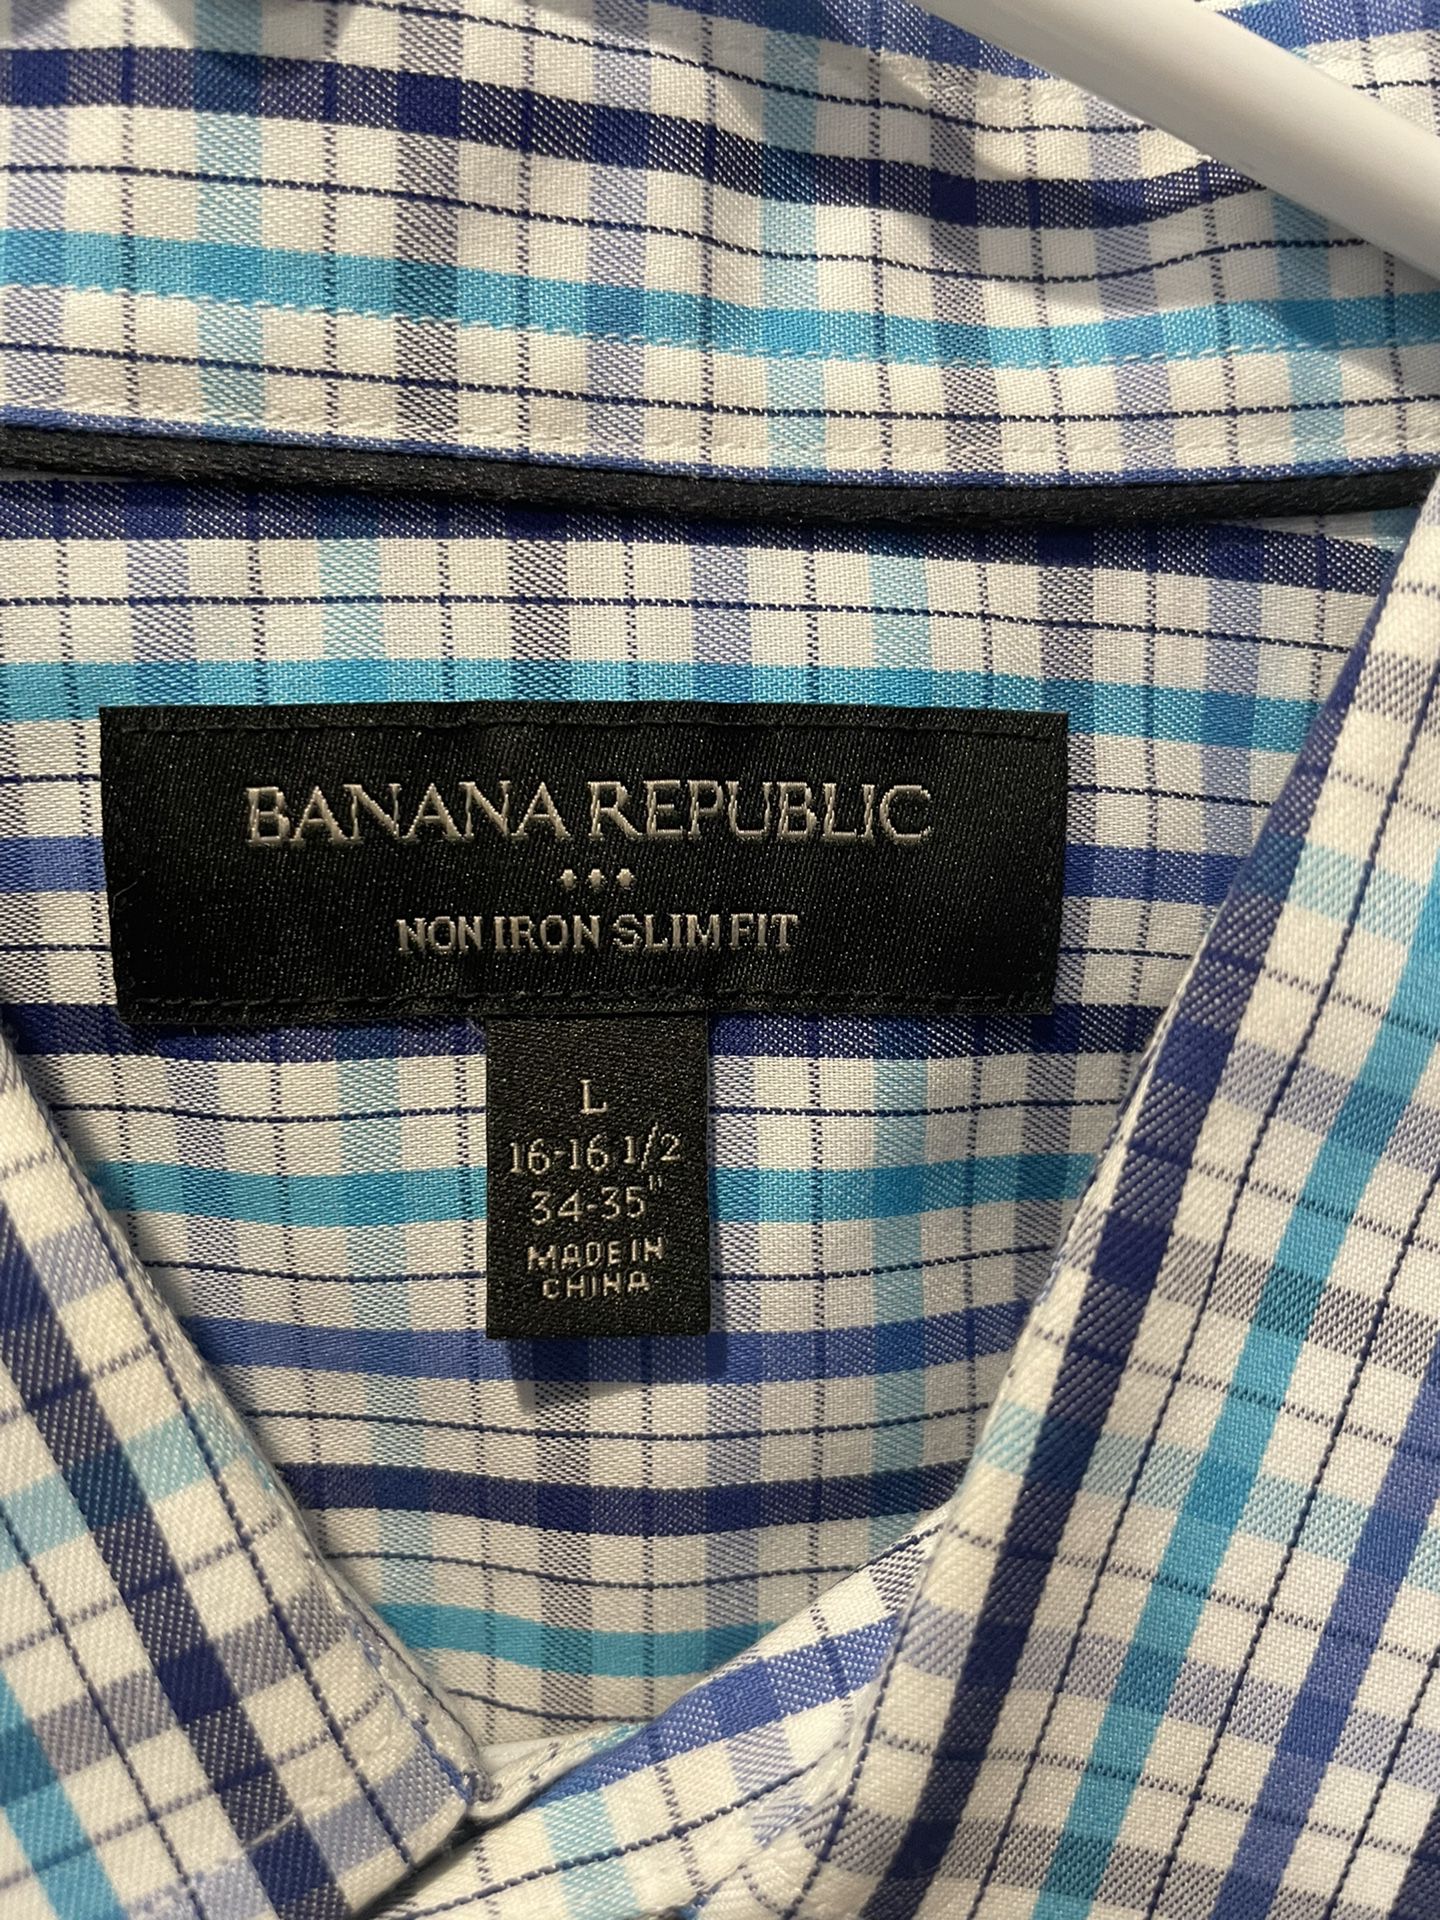 Banana Republic button down dress shirt